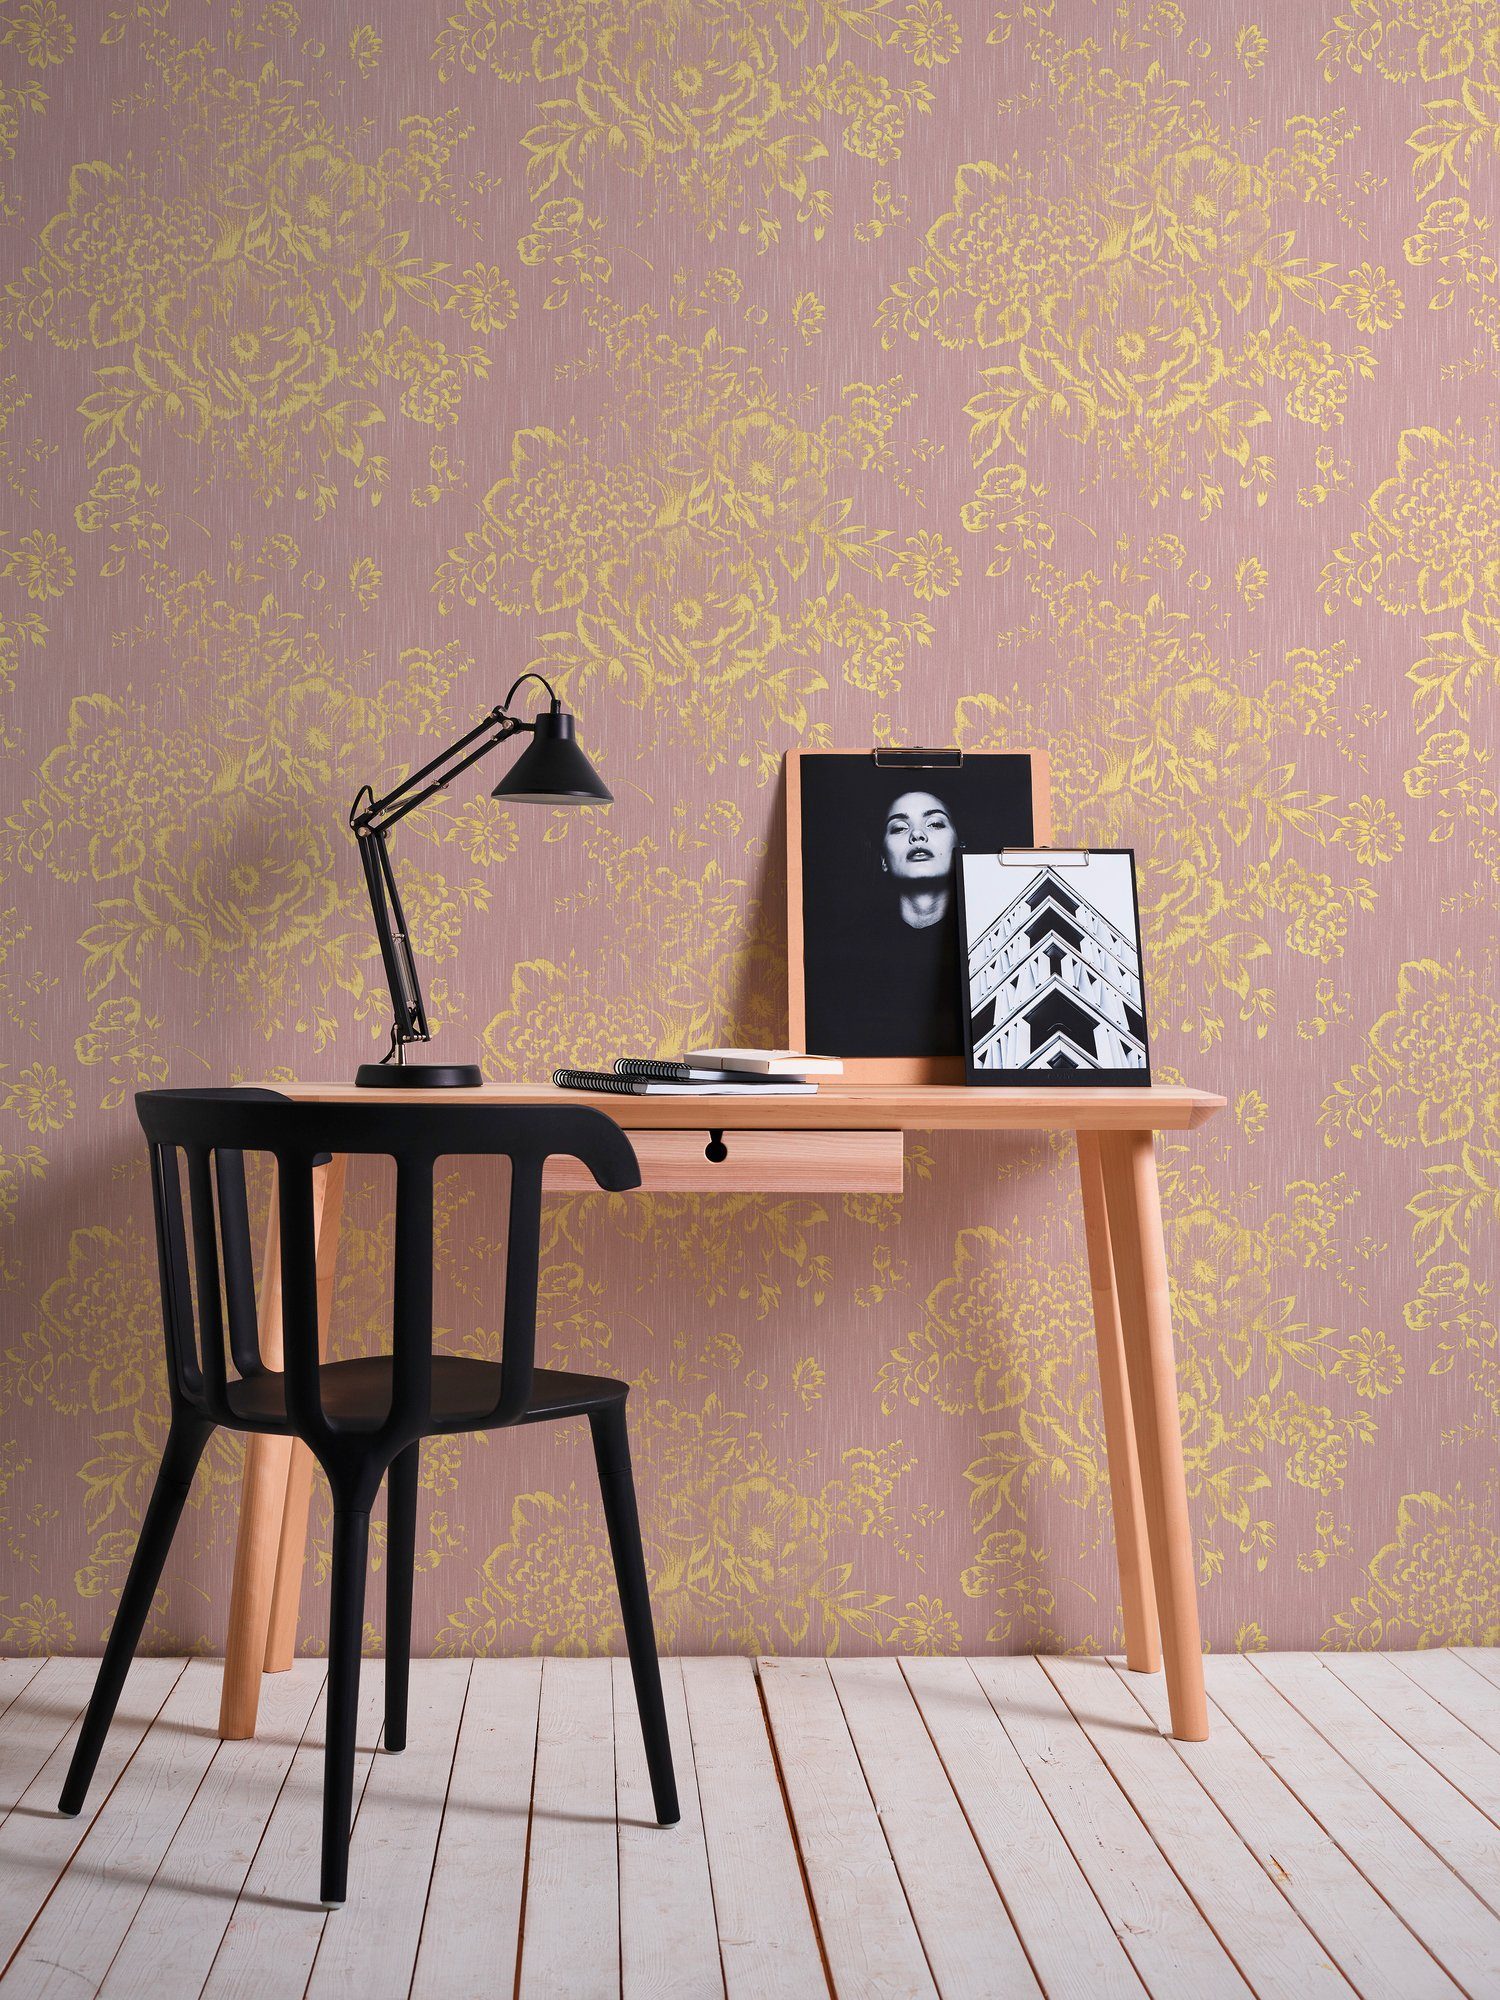 Metallic gold/rosa Blumen matt, glänzend, Architects floral, Création Silk, Barocktapete samtig, Tapete Paper A.S. Textiltapete